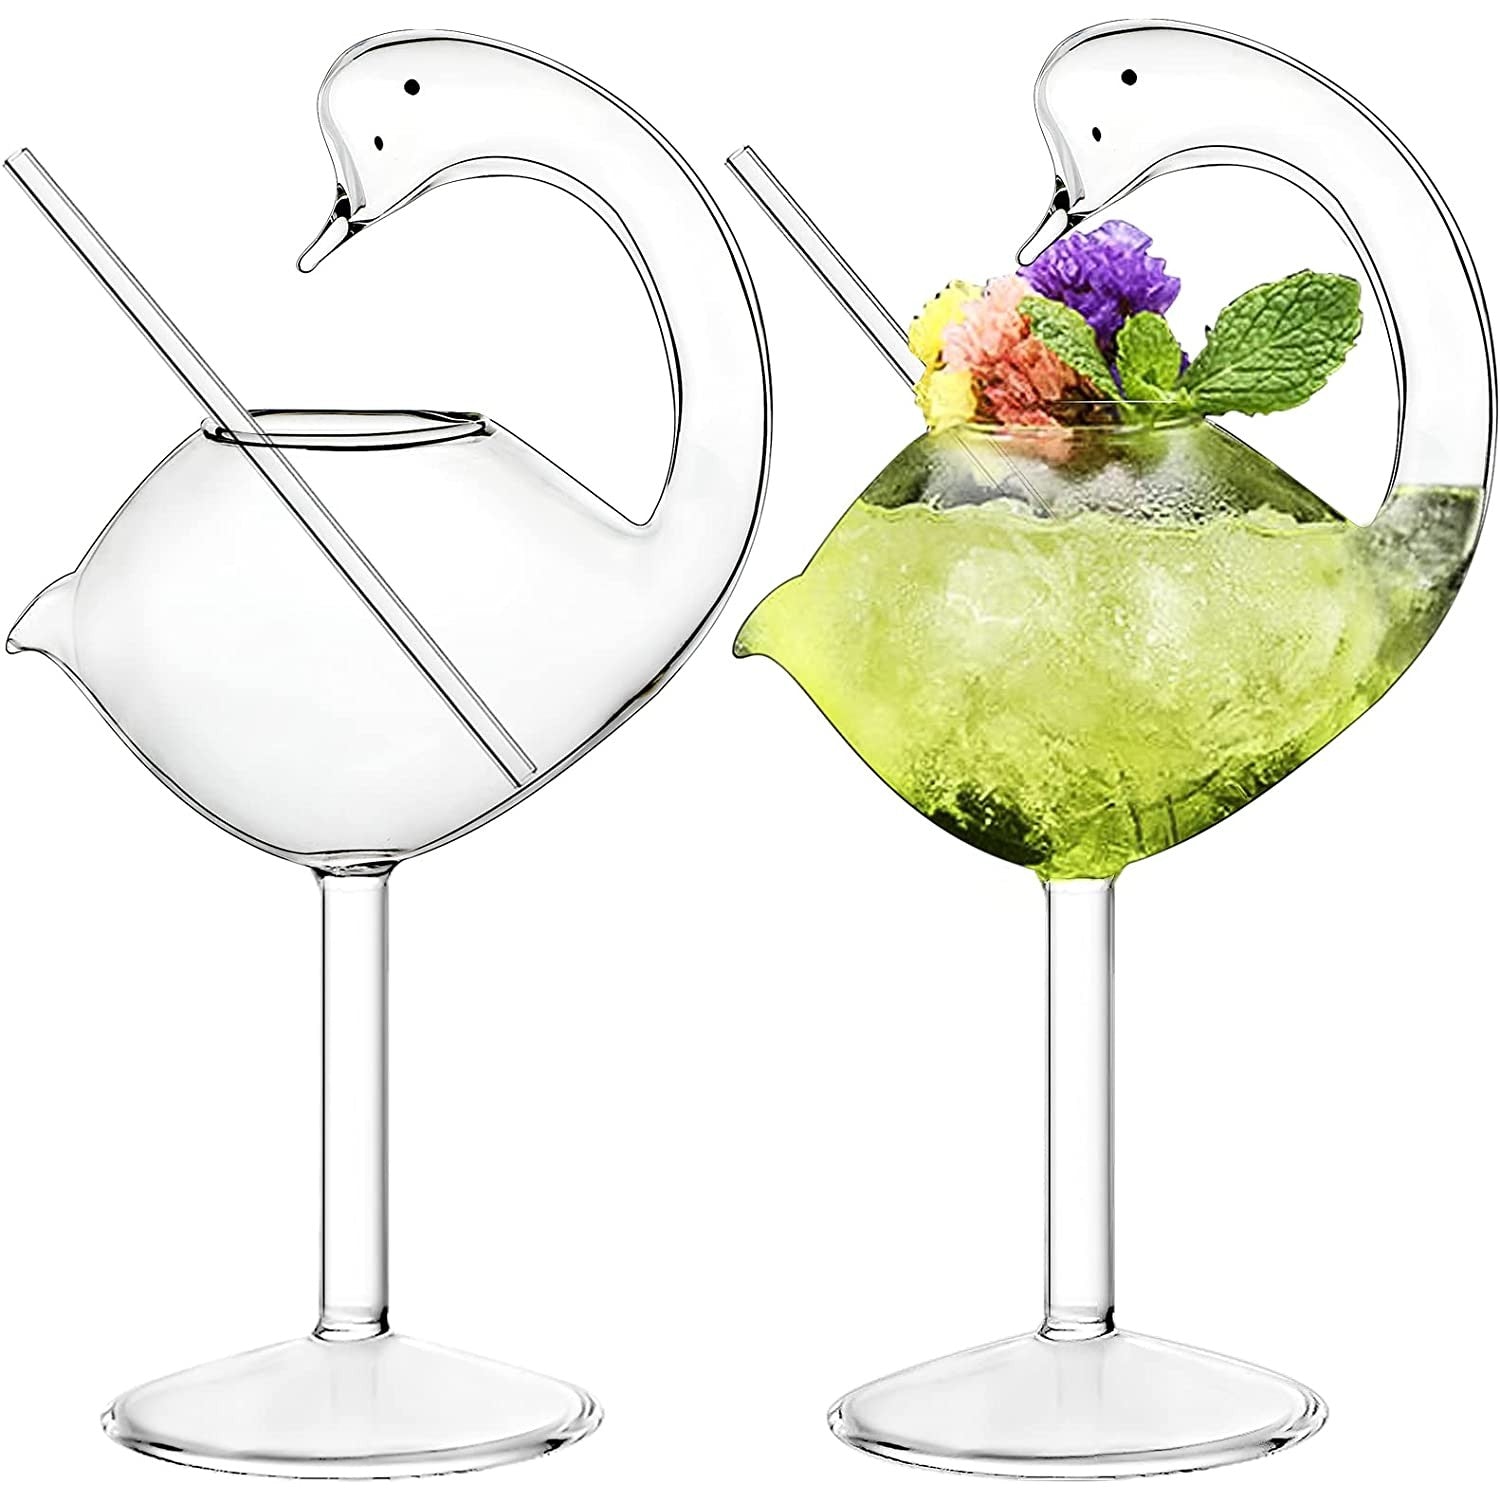 Stylish Cocktail & Mocktail Glasses